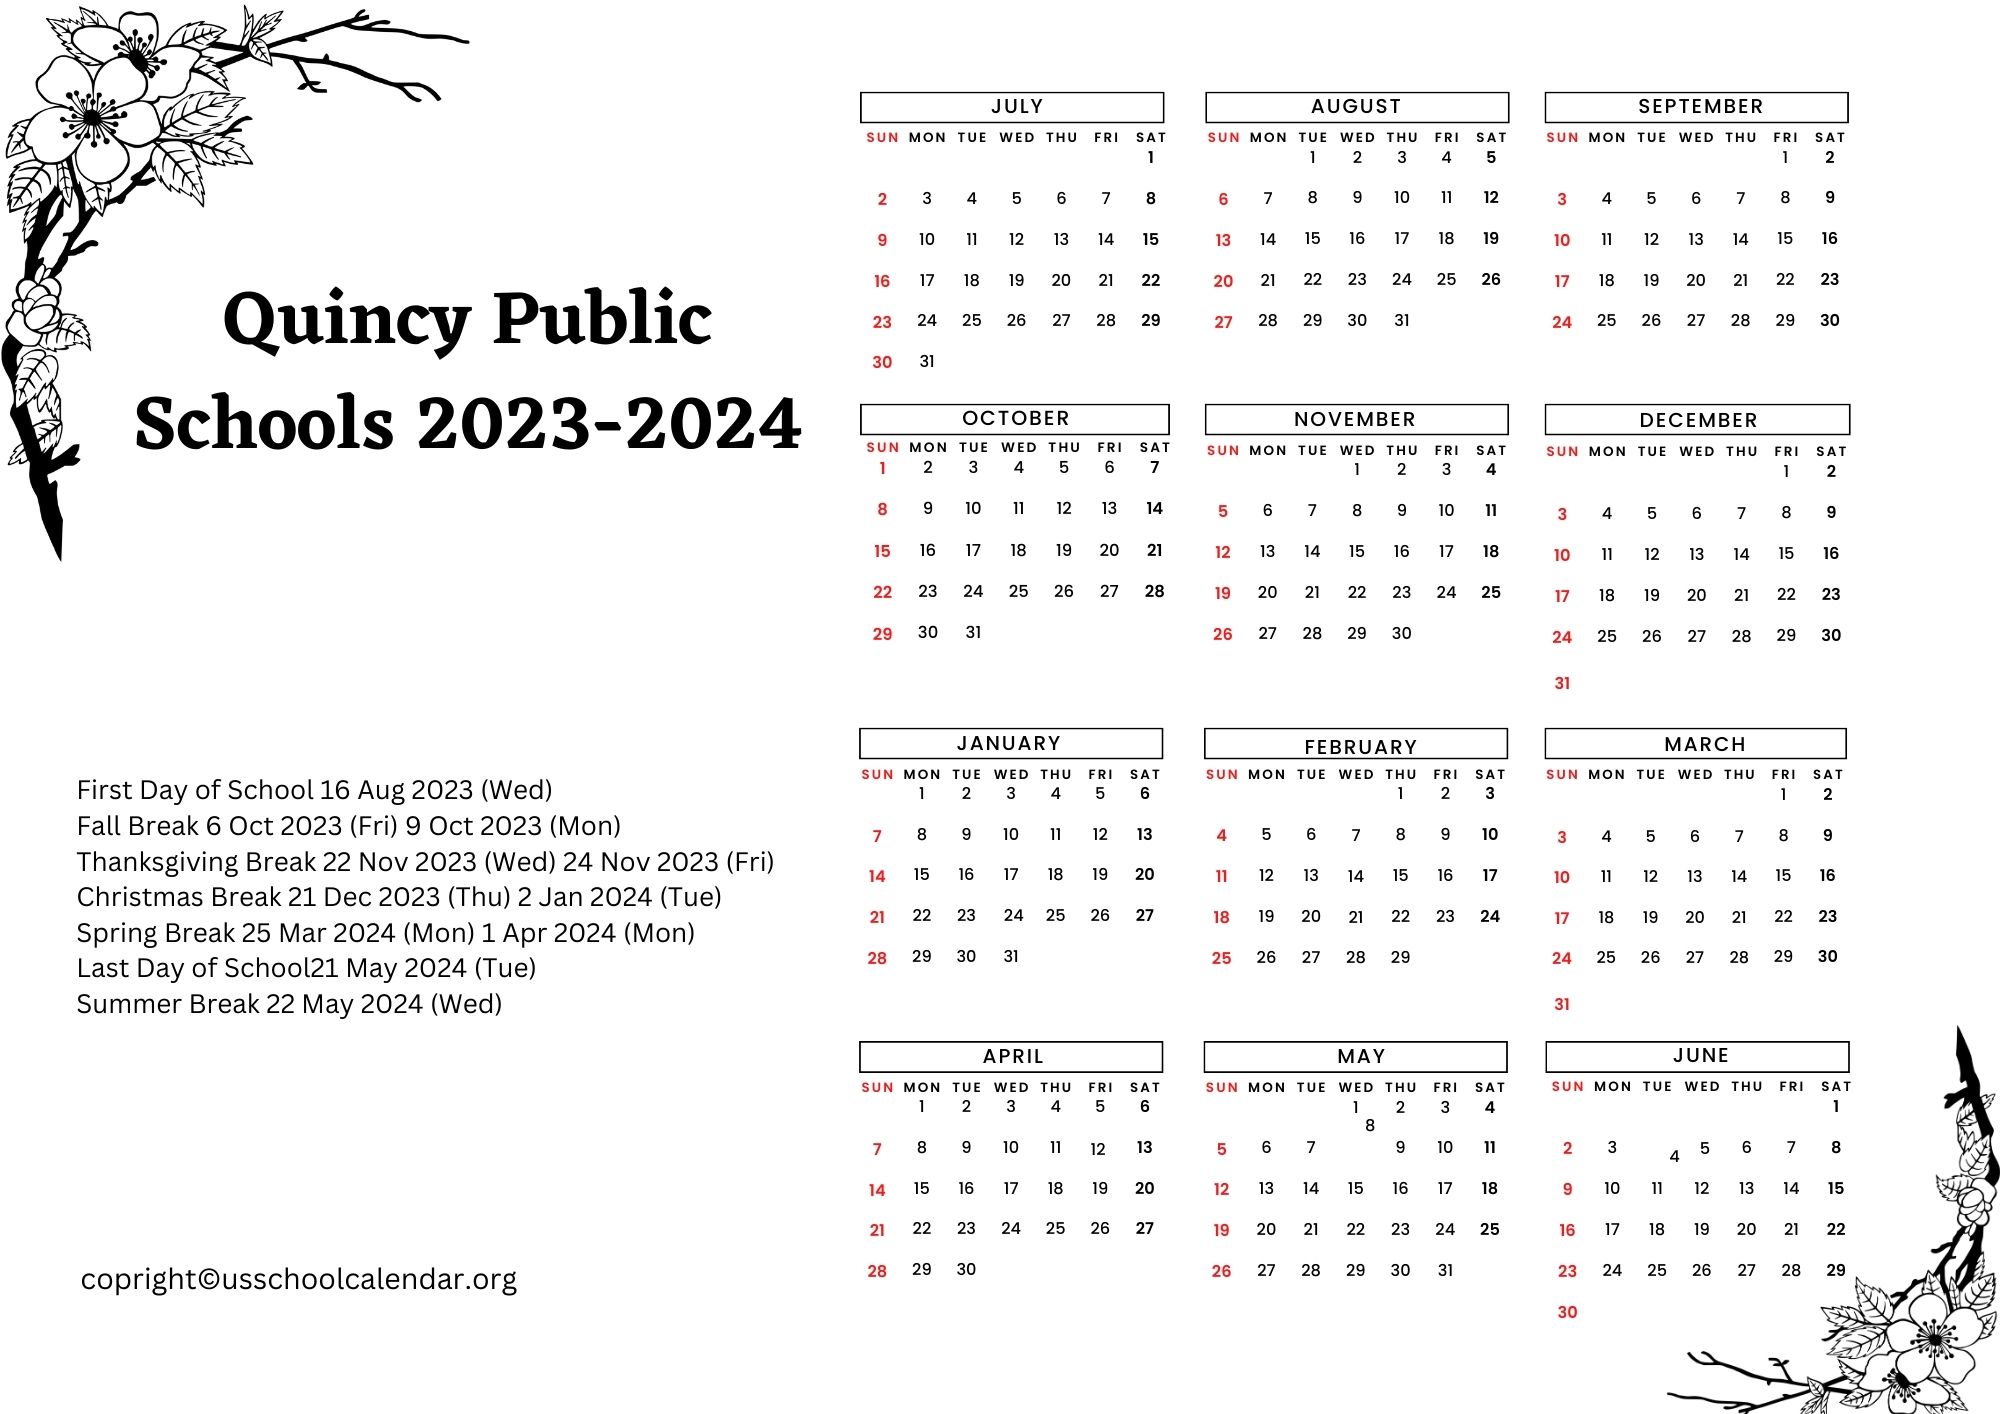 Quincy Public Schools Calendar with Holidays 2023 2024